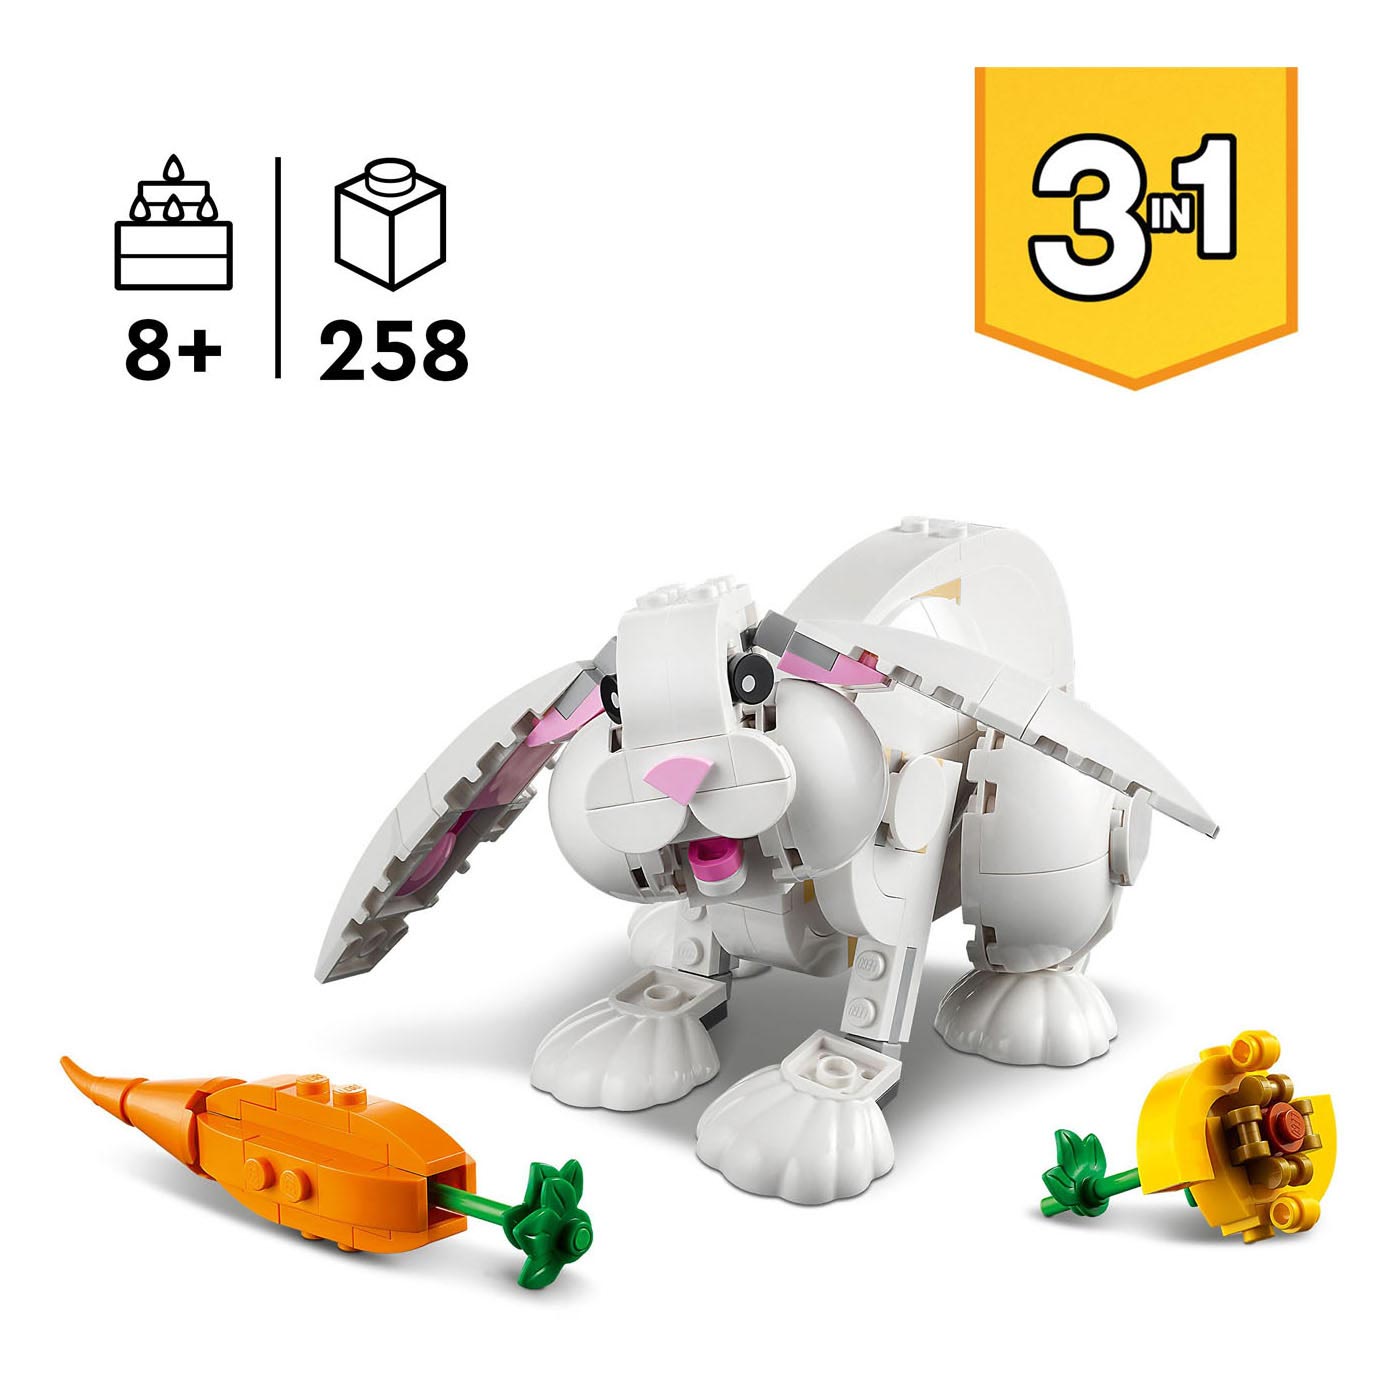 LEGO Creator  31133 Wit Konijn